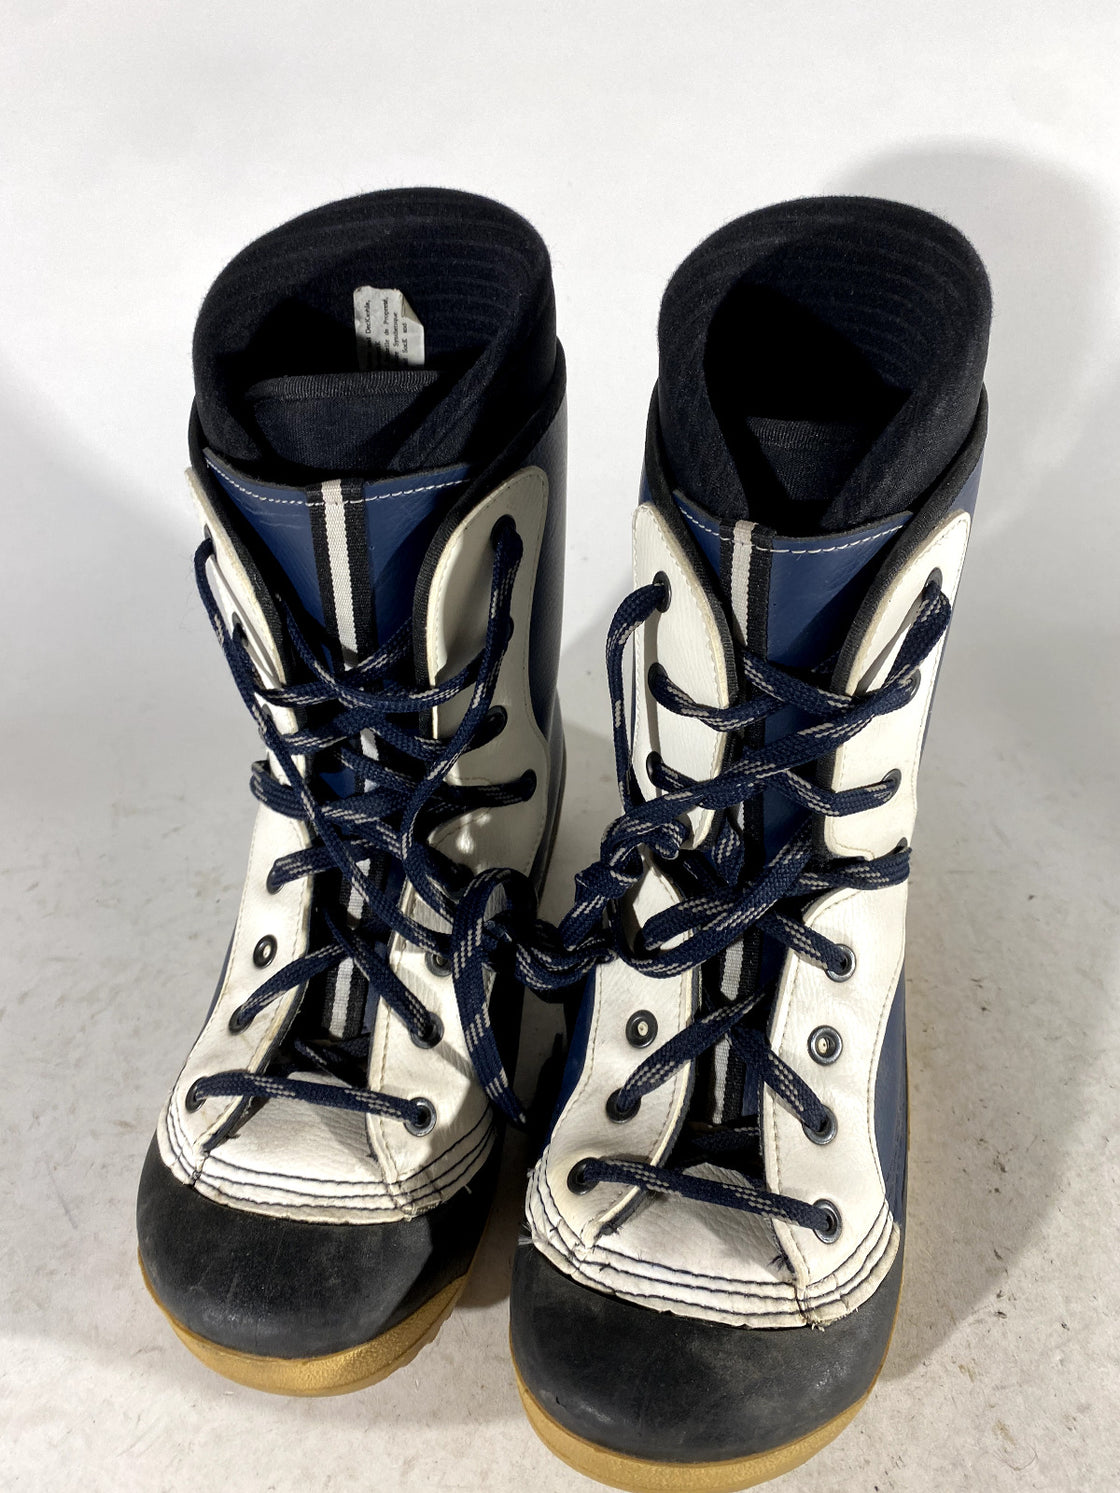 SHARK Snowboard Boots Size EU44 US10.5 UK9.5 Mondo 278 mm